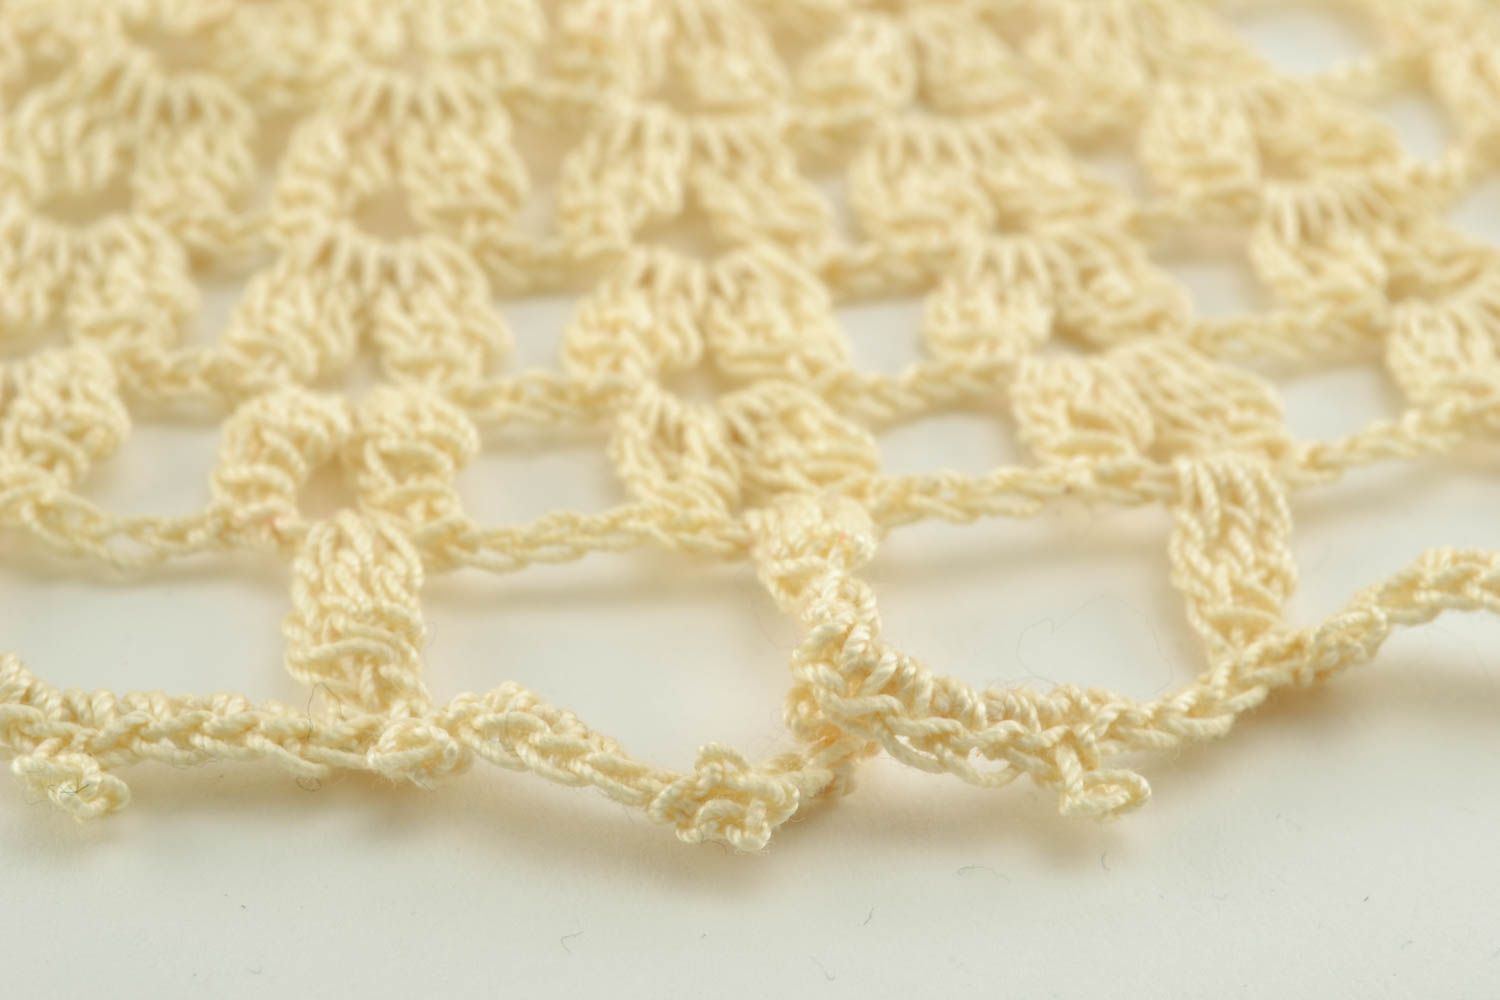 Lace crochet tablecloth photo 2